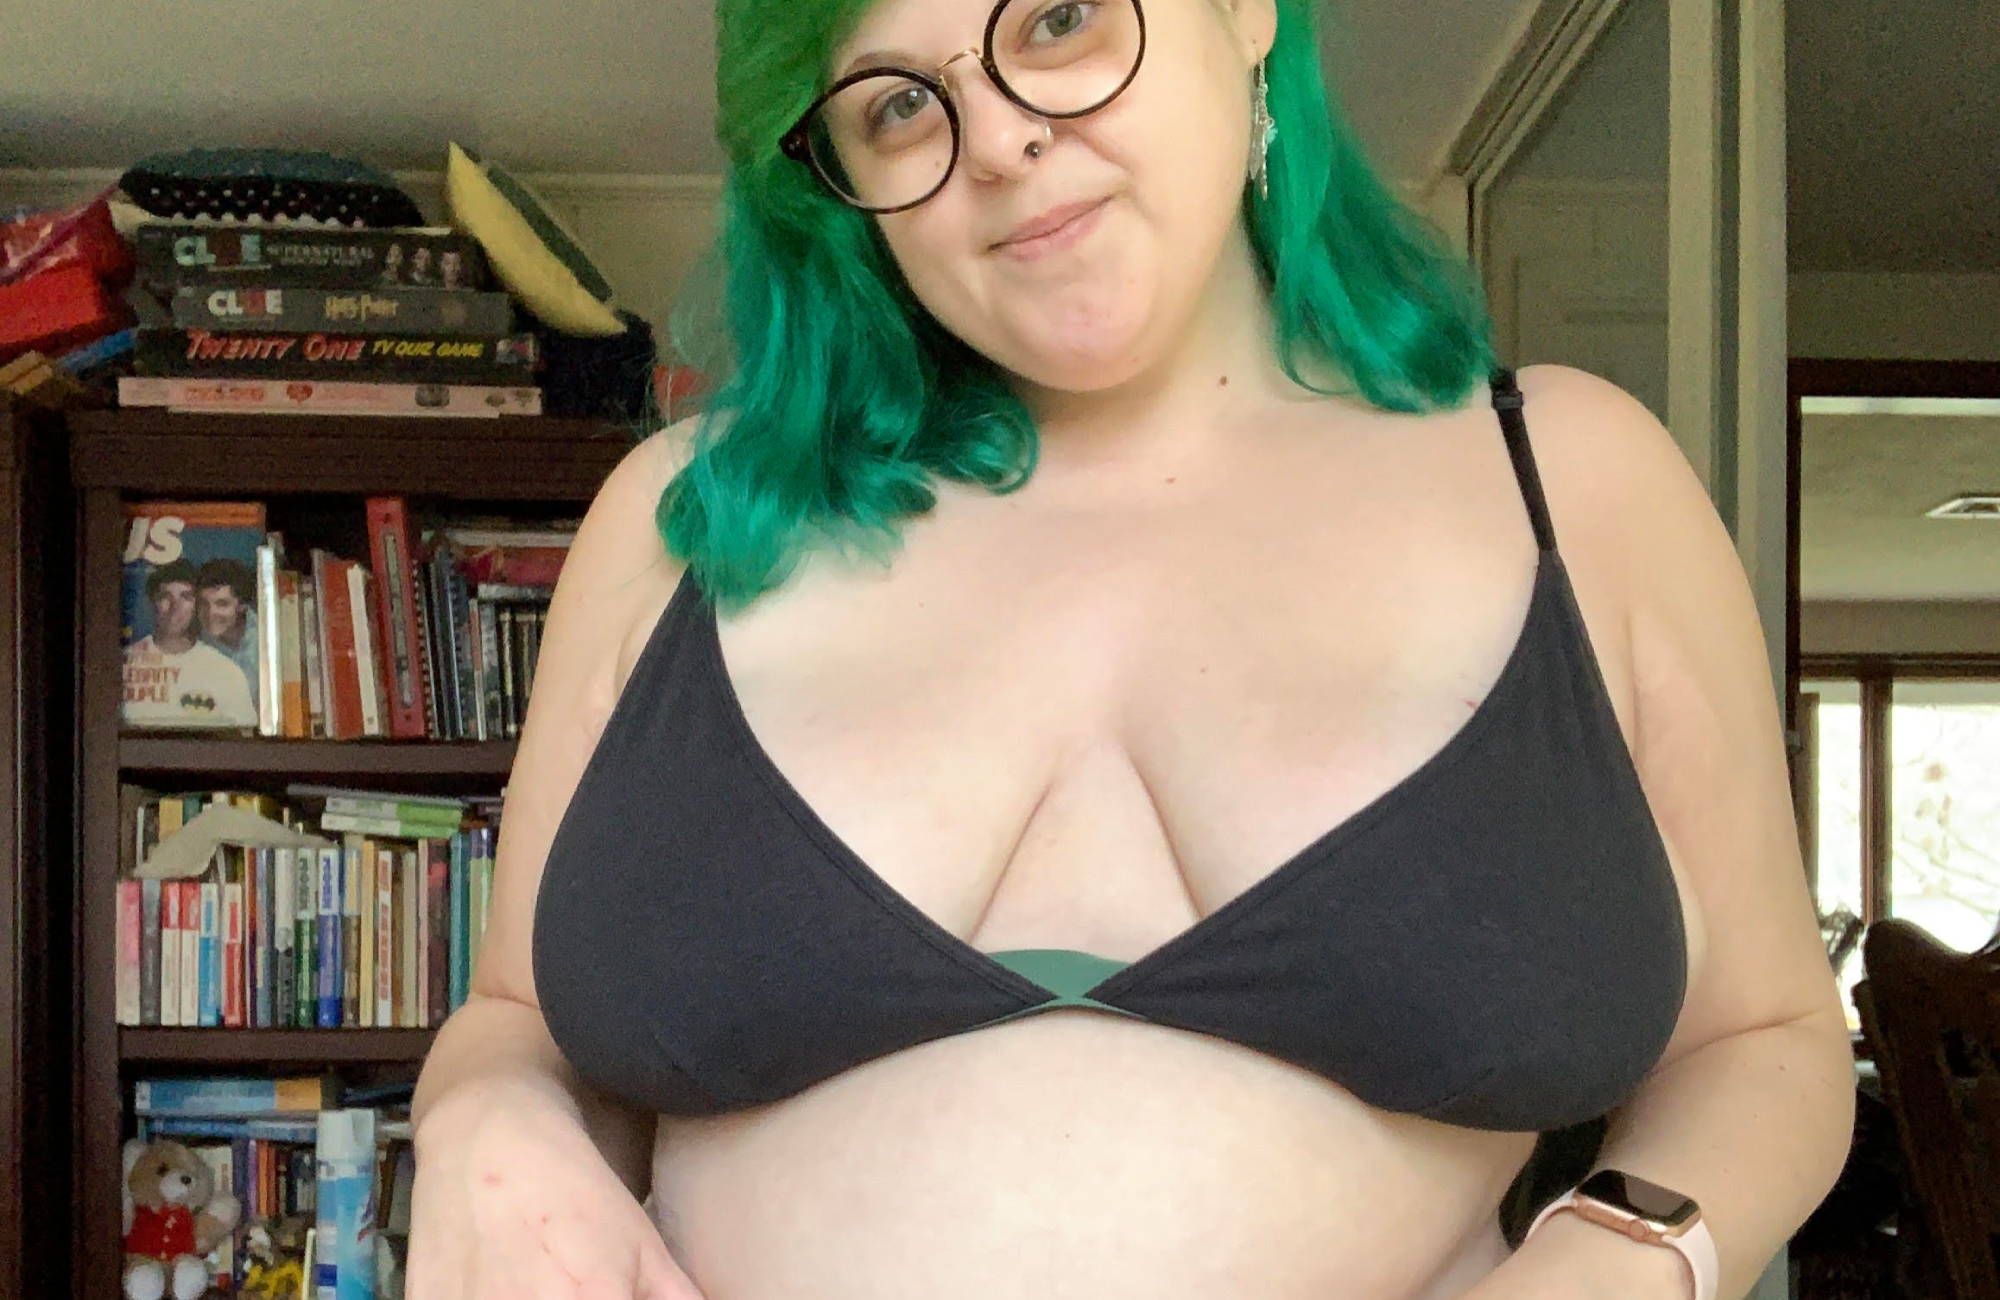 ahamed yoonus recommends overflowing bra pics pic